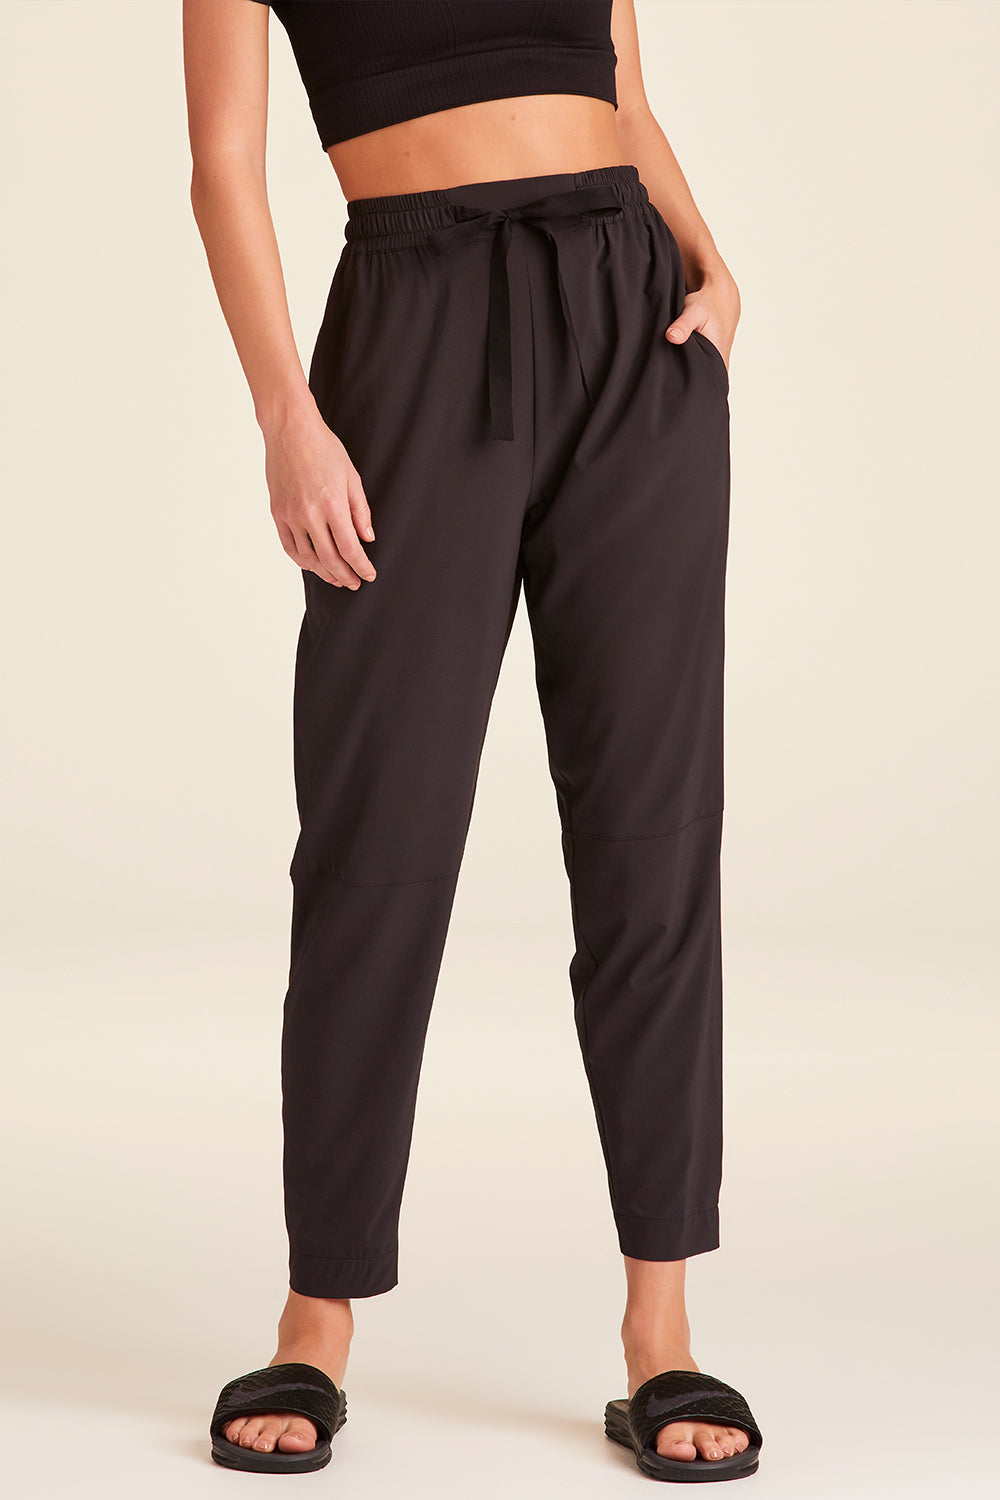 Designer Trousers | Women's Luxury Fashion | Shop online at garden.ogaan.Com